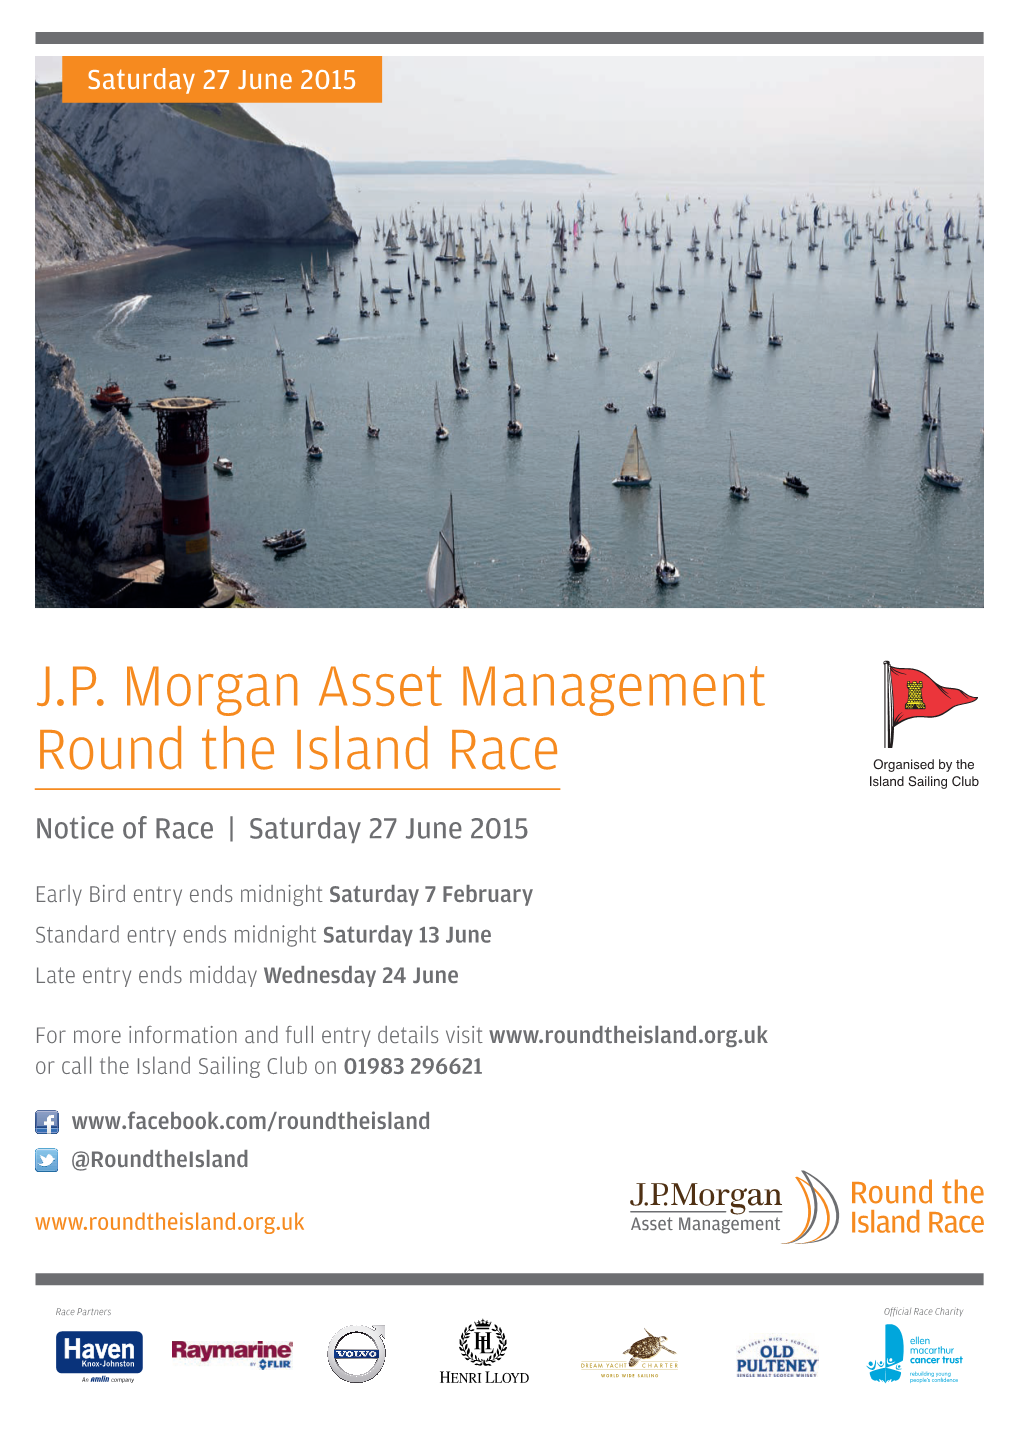 J.P. Morgan Asset Management Round the Island Race